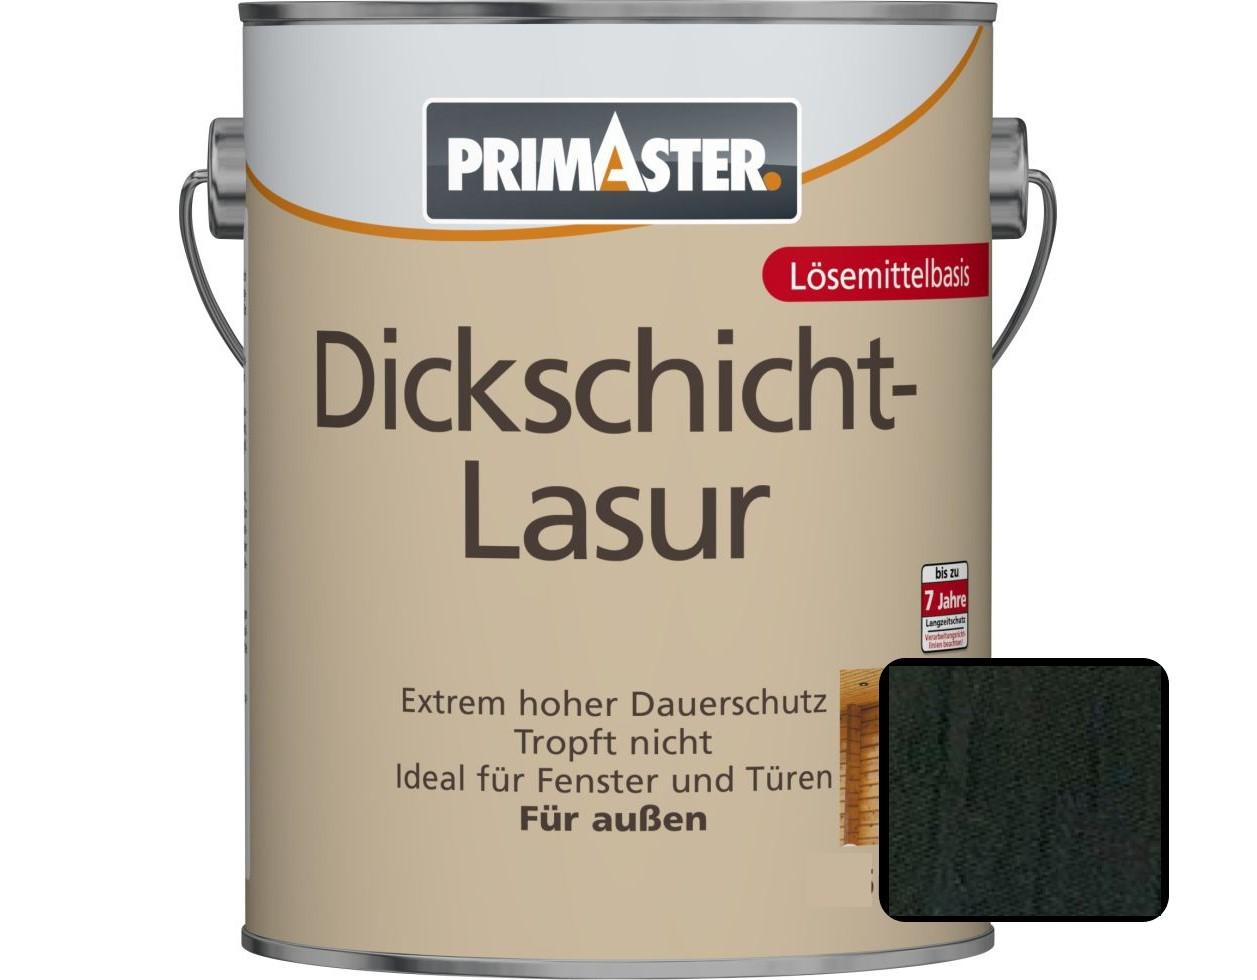 Primaster Dickschichtlasur 2,5 L ebenholz GLO765153210